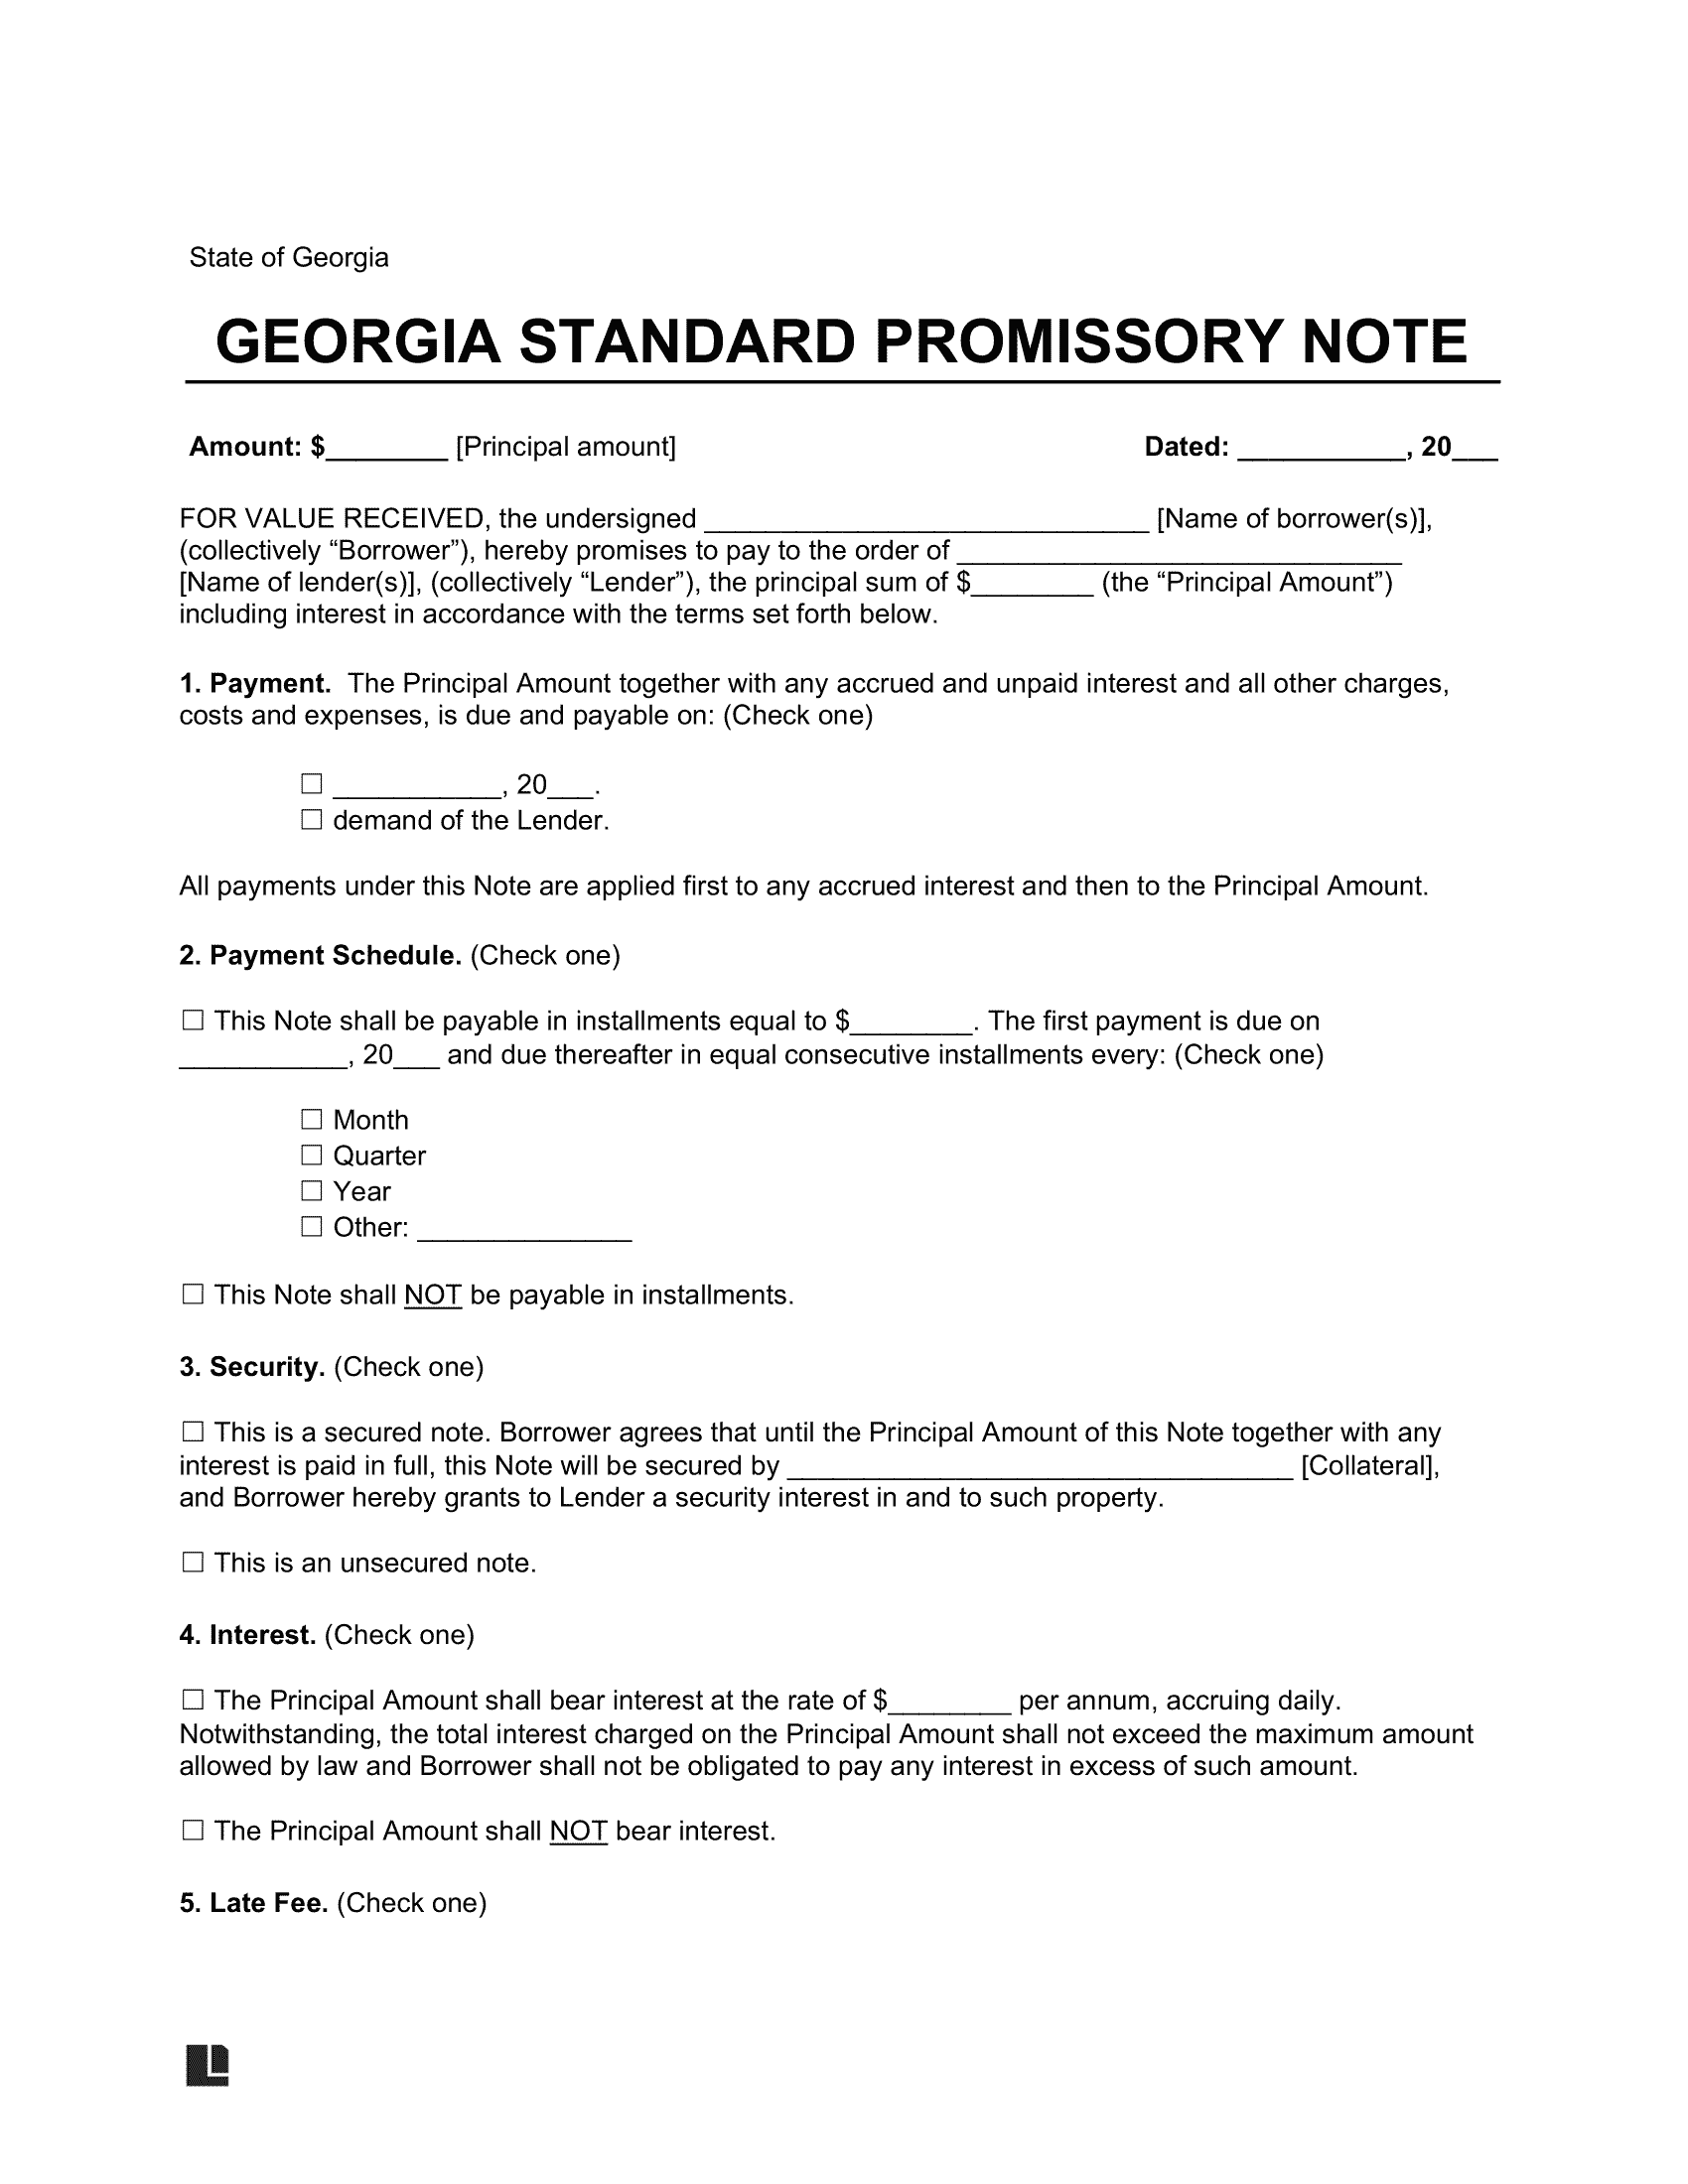 Georgia Standard Promissory Note Template